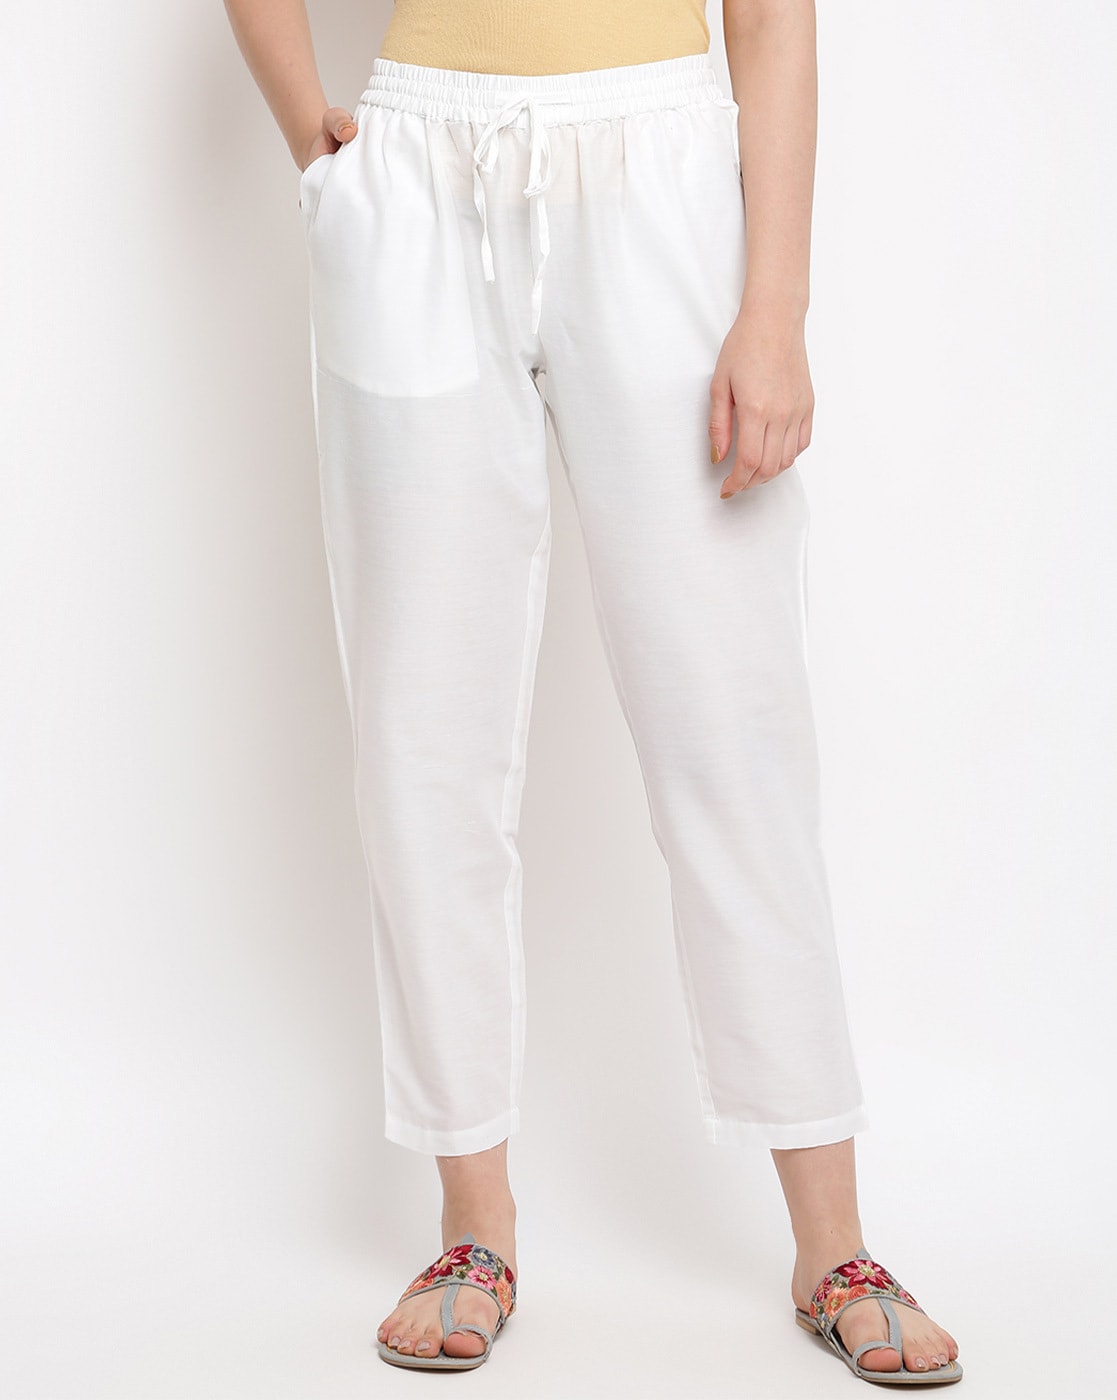 NWT COS High Waist White Pants Drawstring Organic Cotton Straight Cut ,  Size 4 | eBay